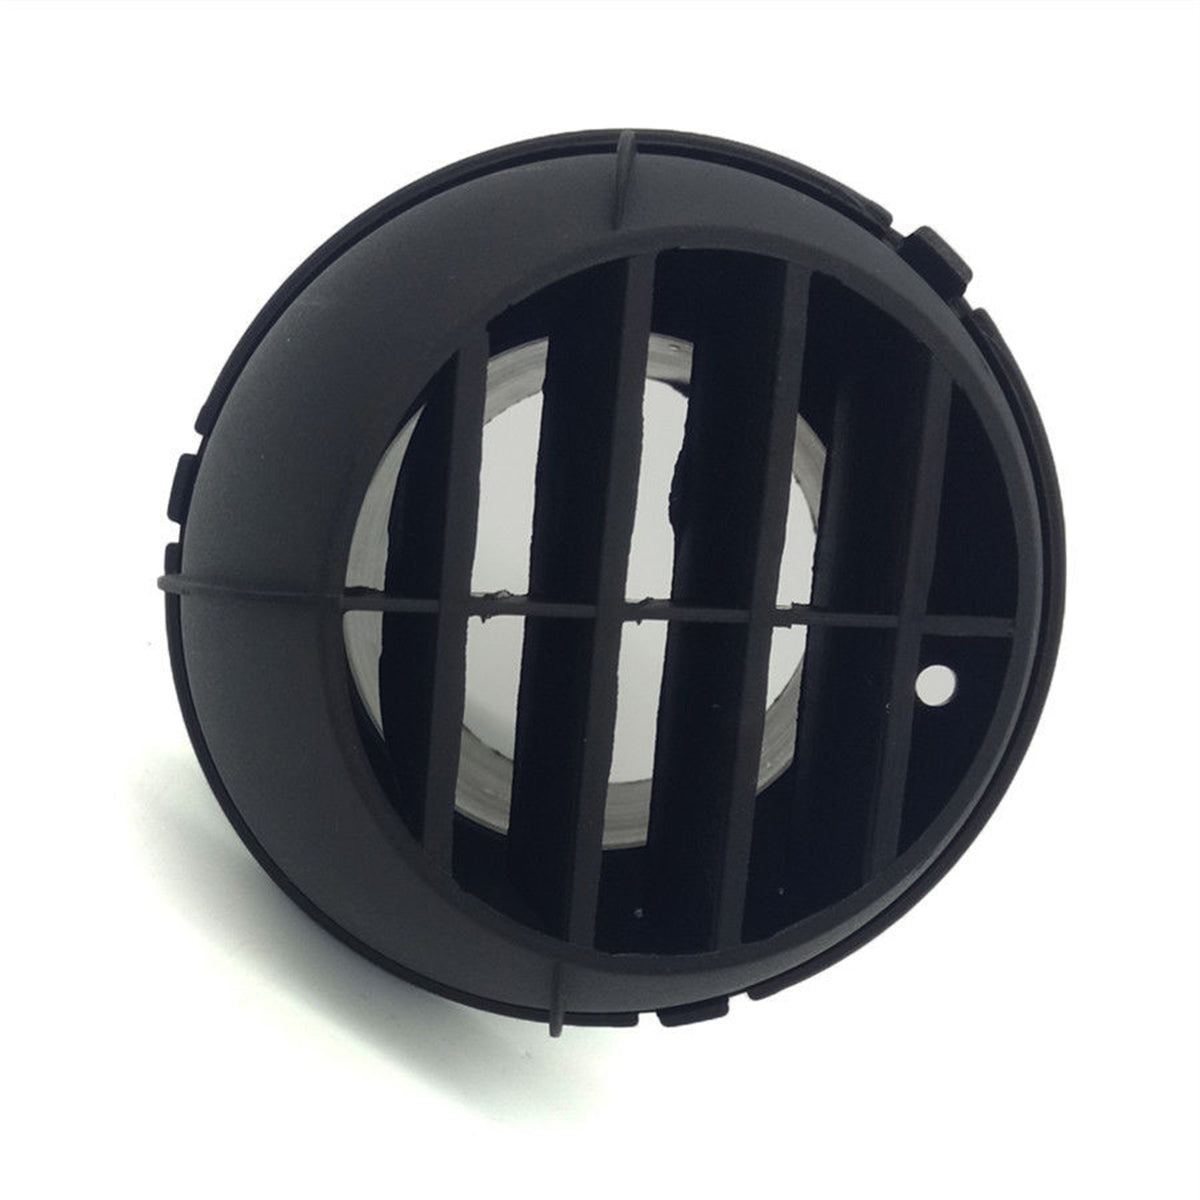 Black Air Outlet Plastic Net Cover For Exhaust Muffler Car Air Parking Heater